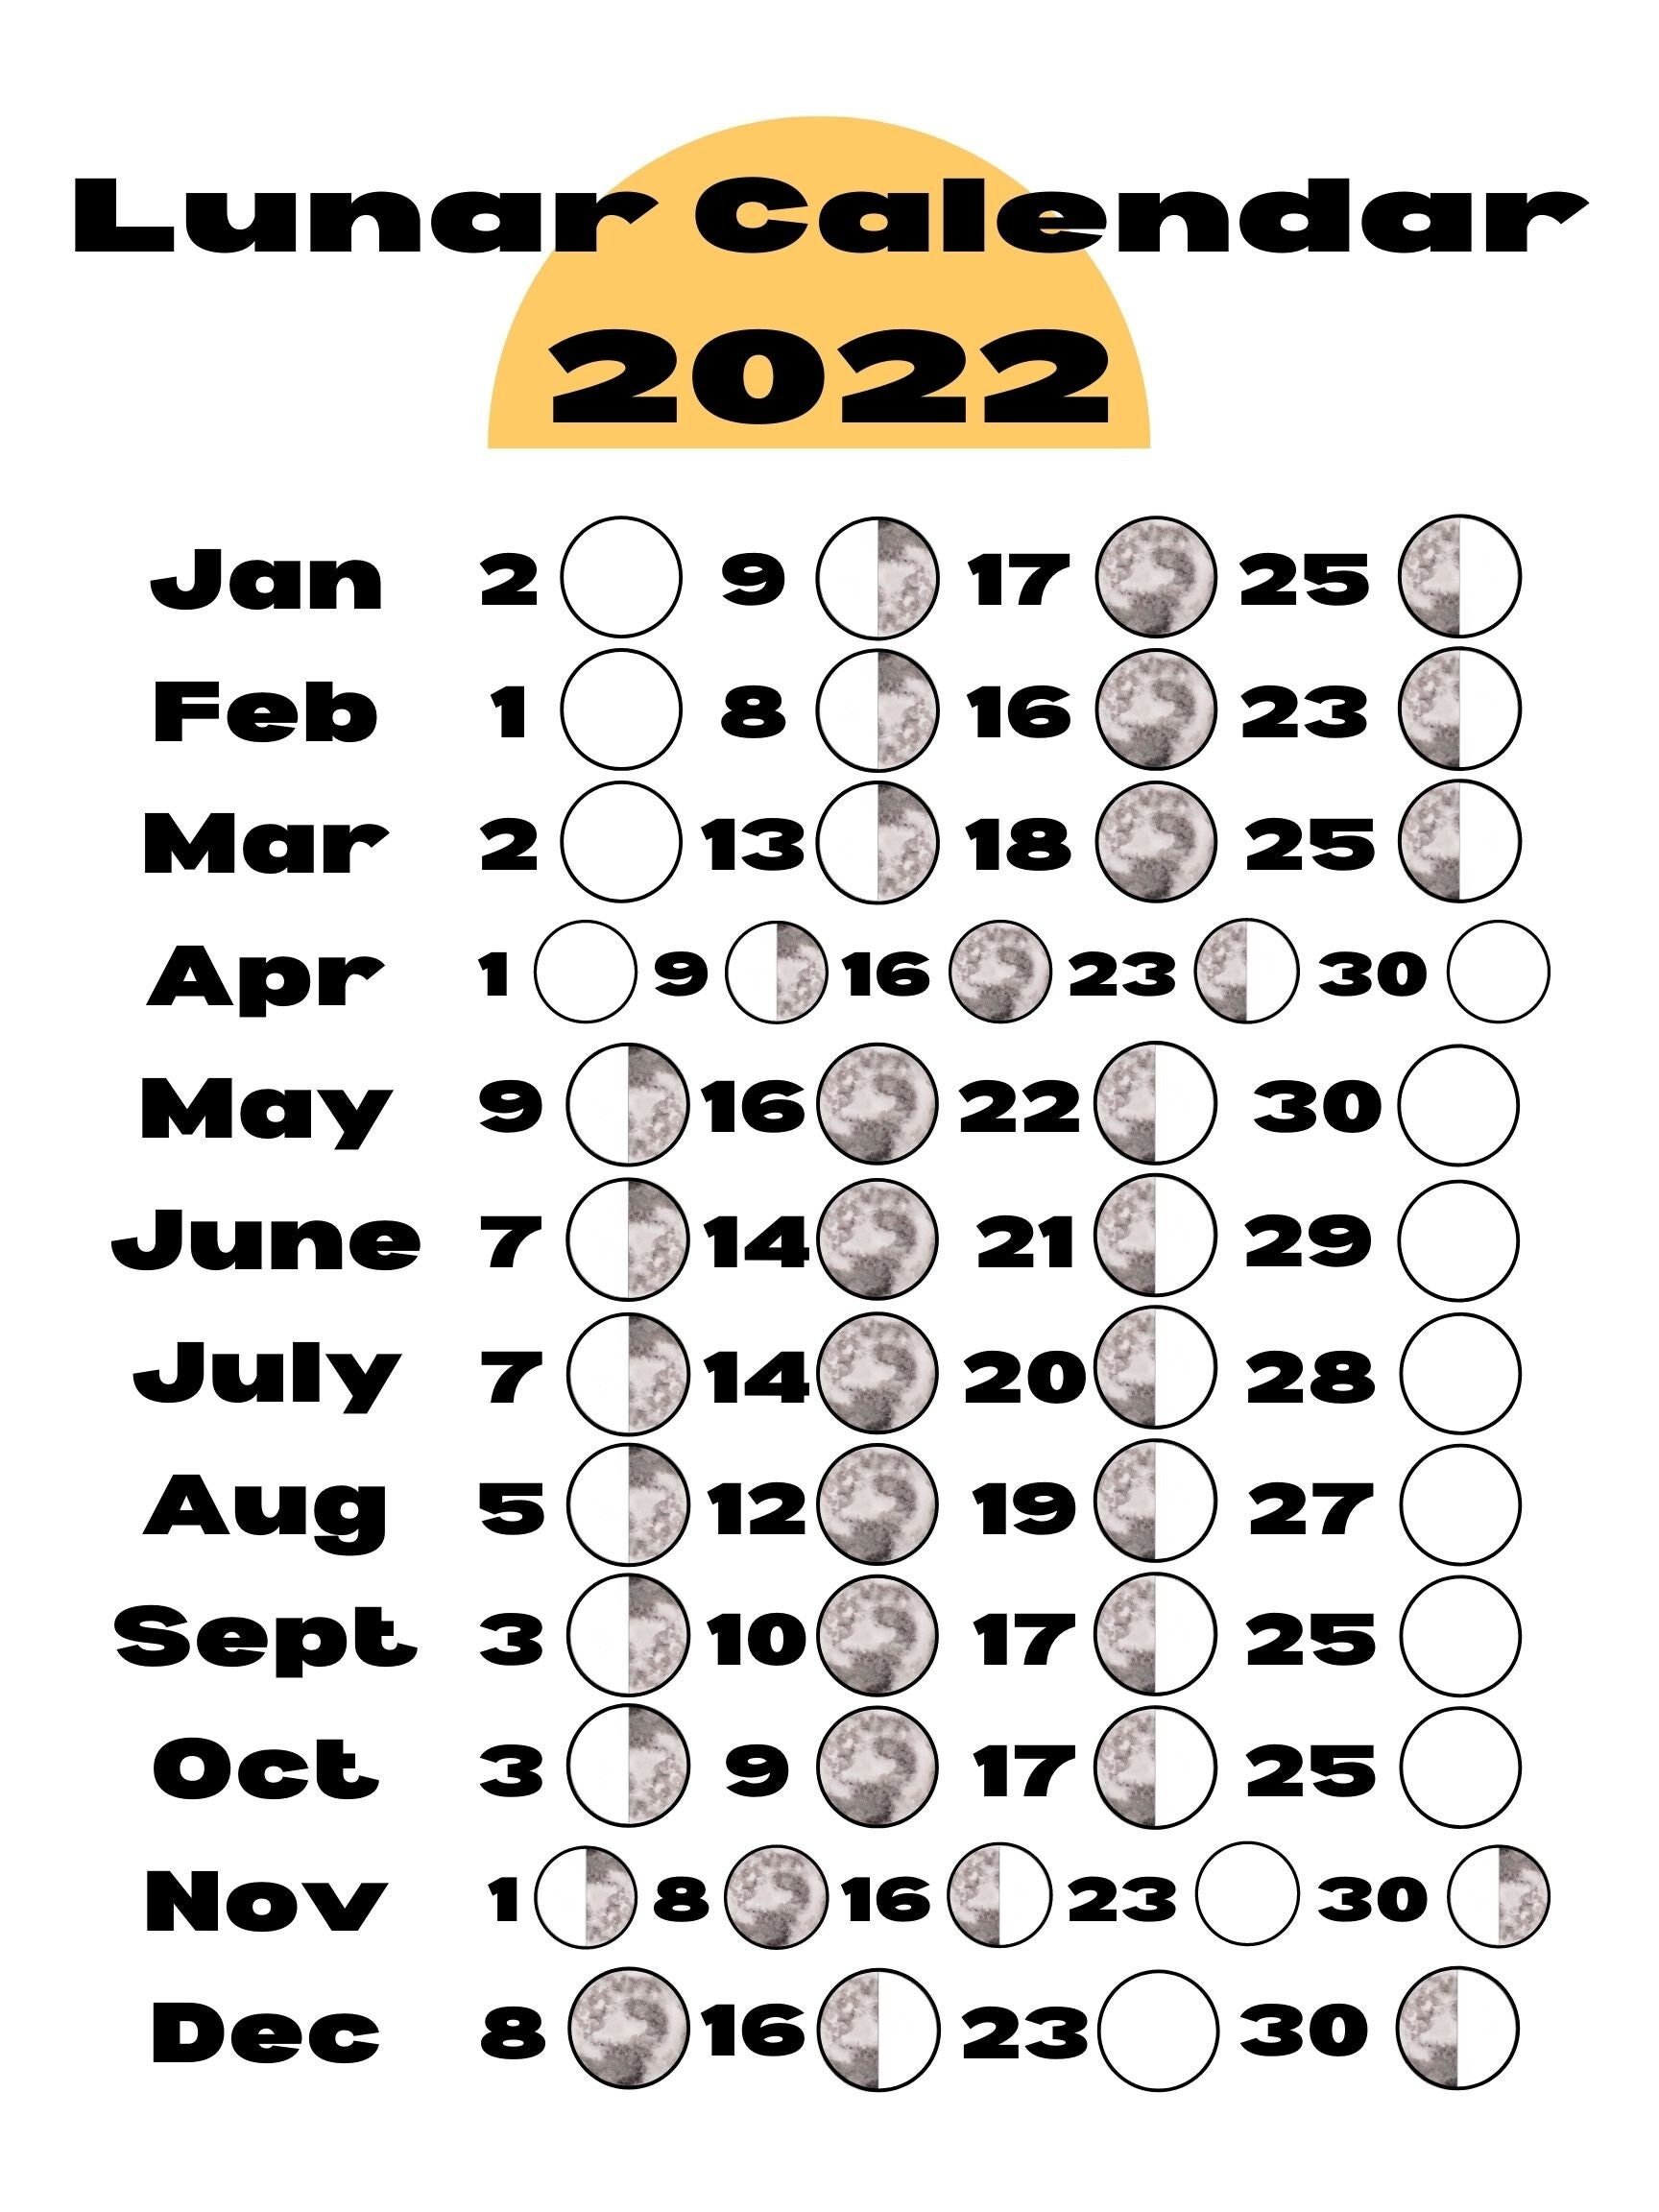 Get Moon Calendar October 2022